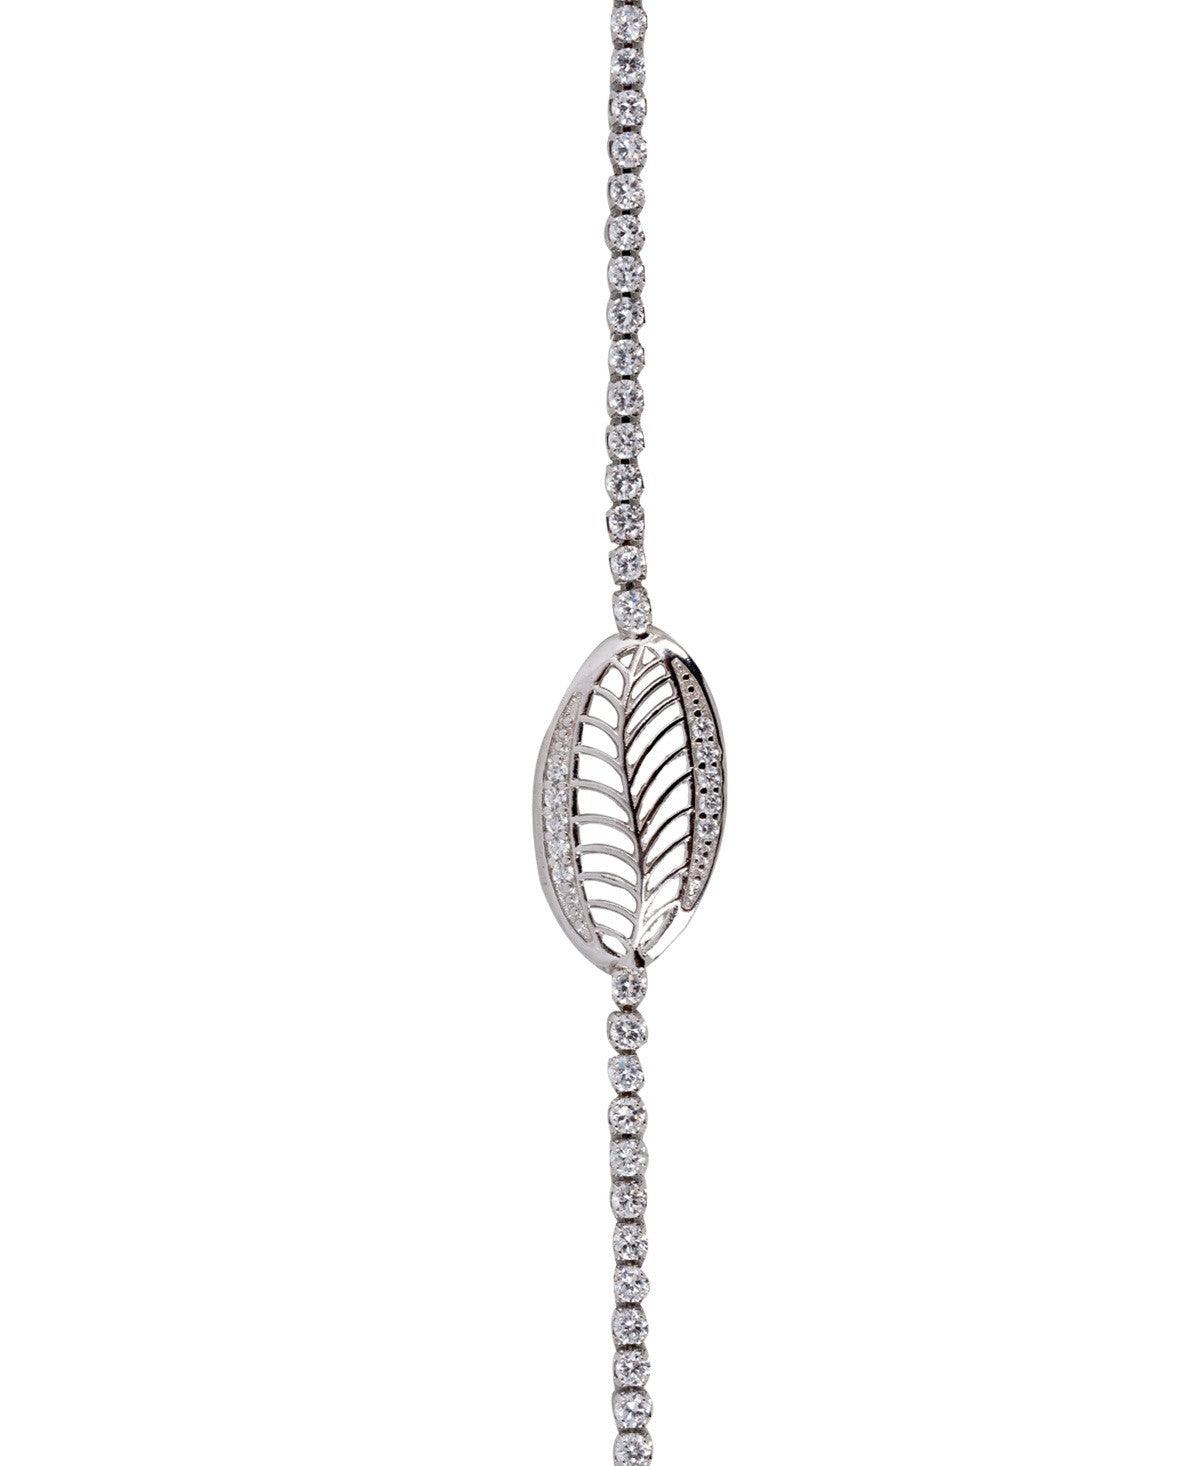 Fashionable Stone Studded Metallic Bracelet - Chandrani Pearls